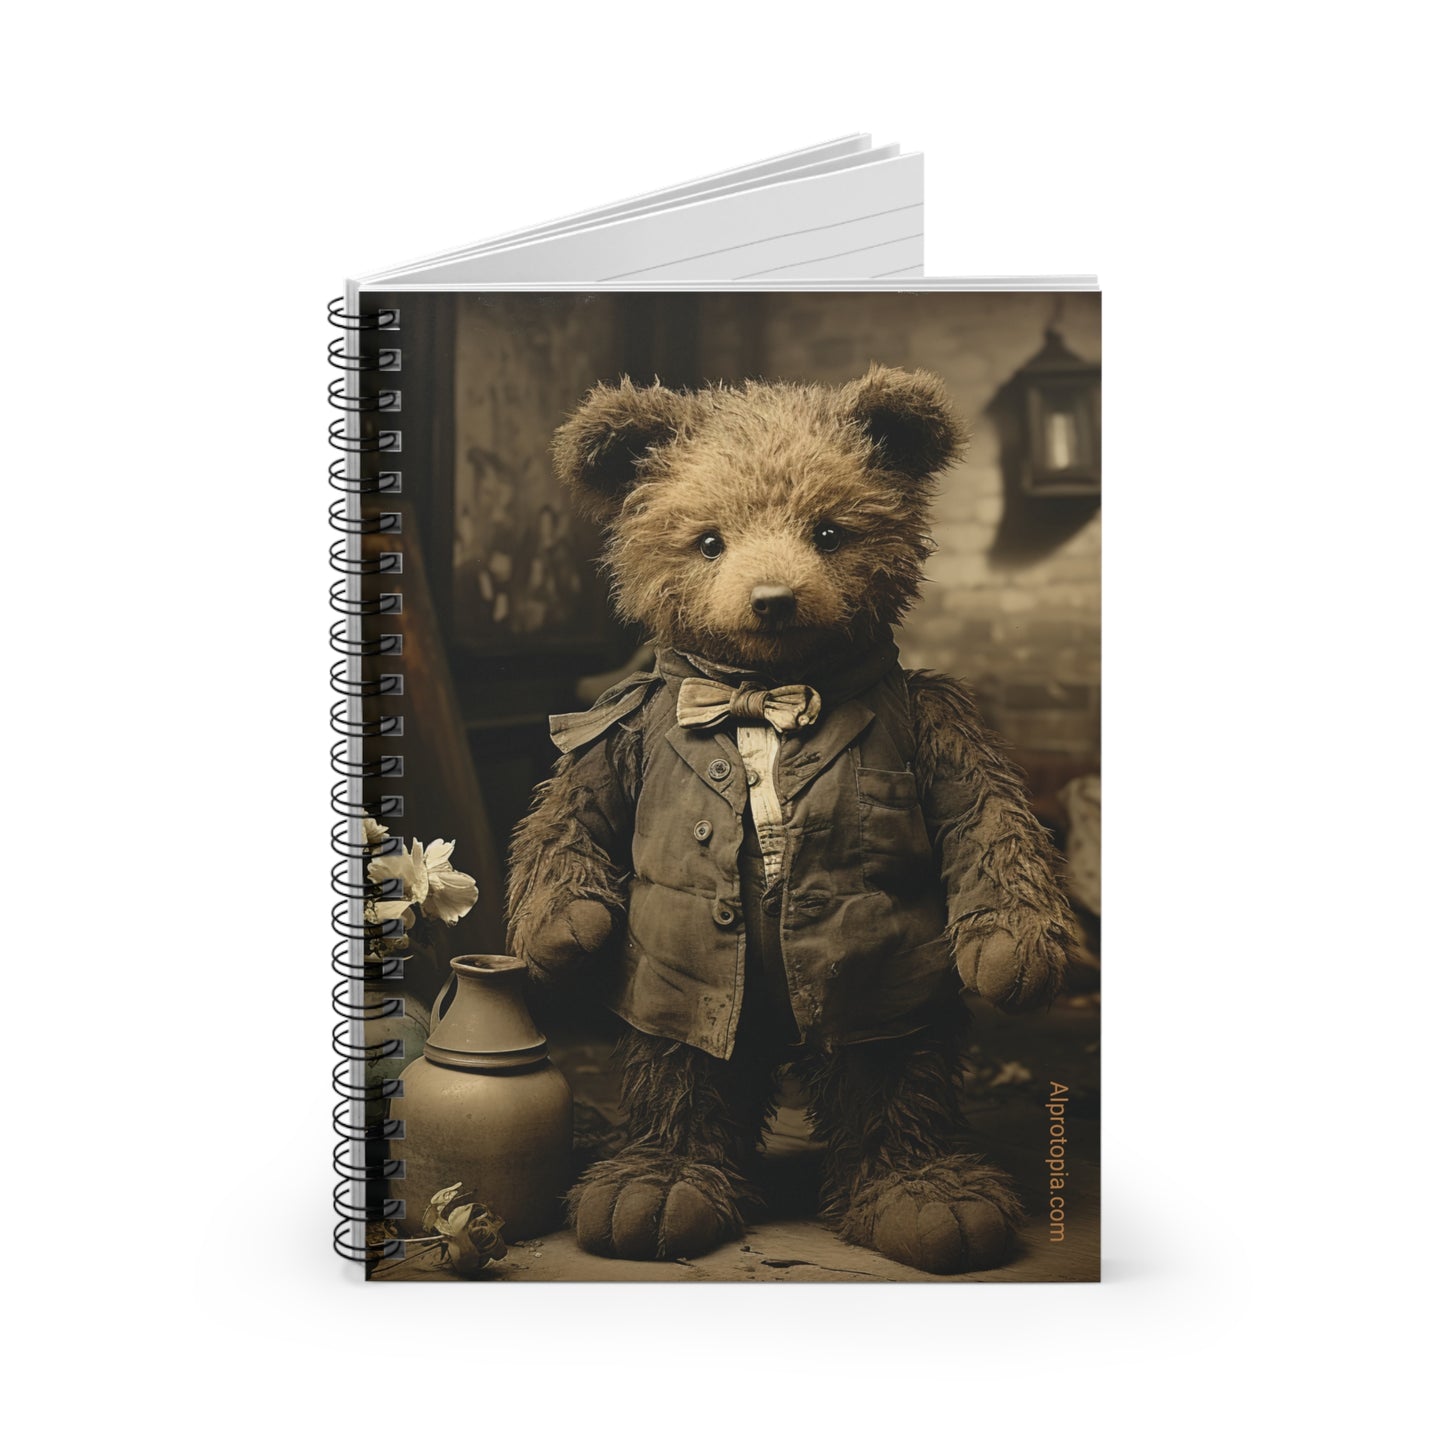 Spiral Notebook - Ruled Line. Vintage Teddy Bear